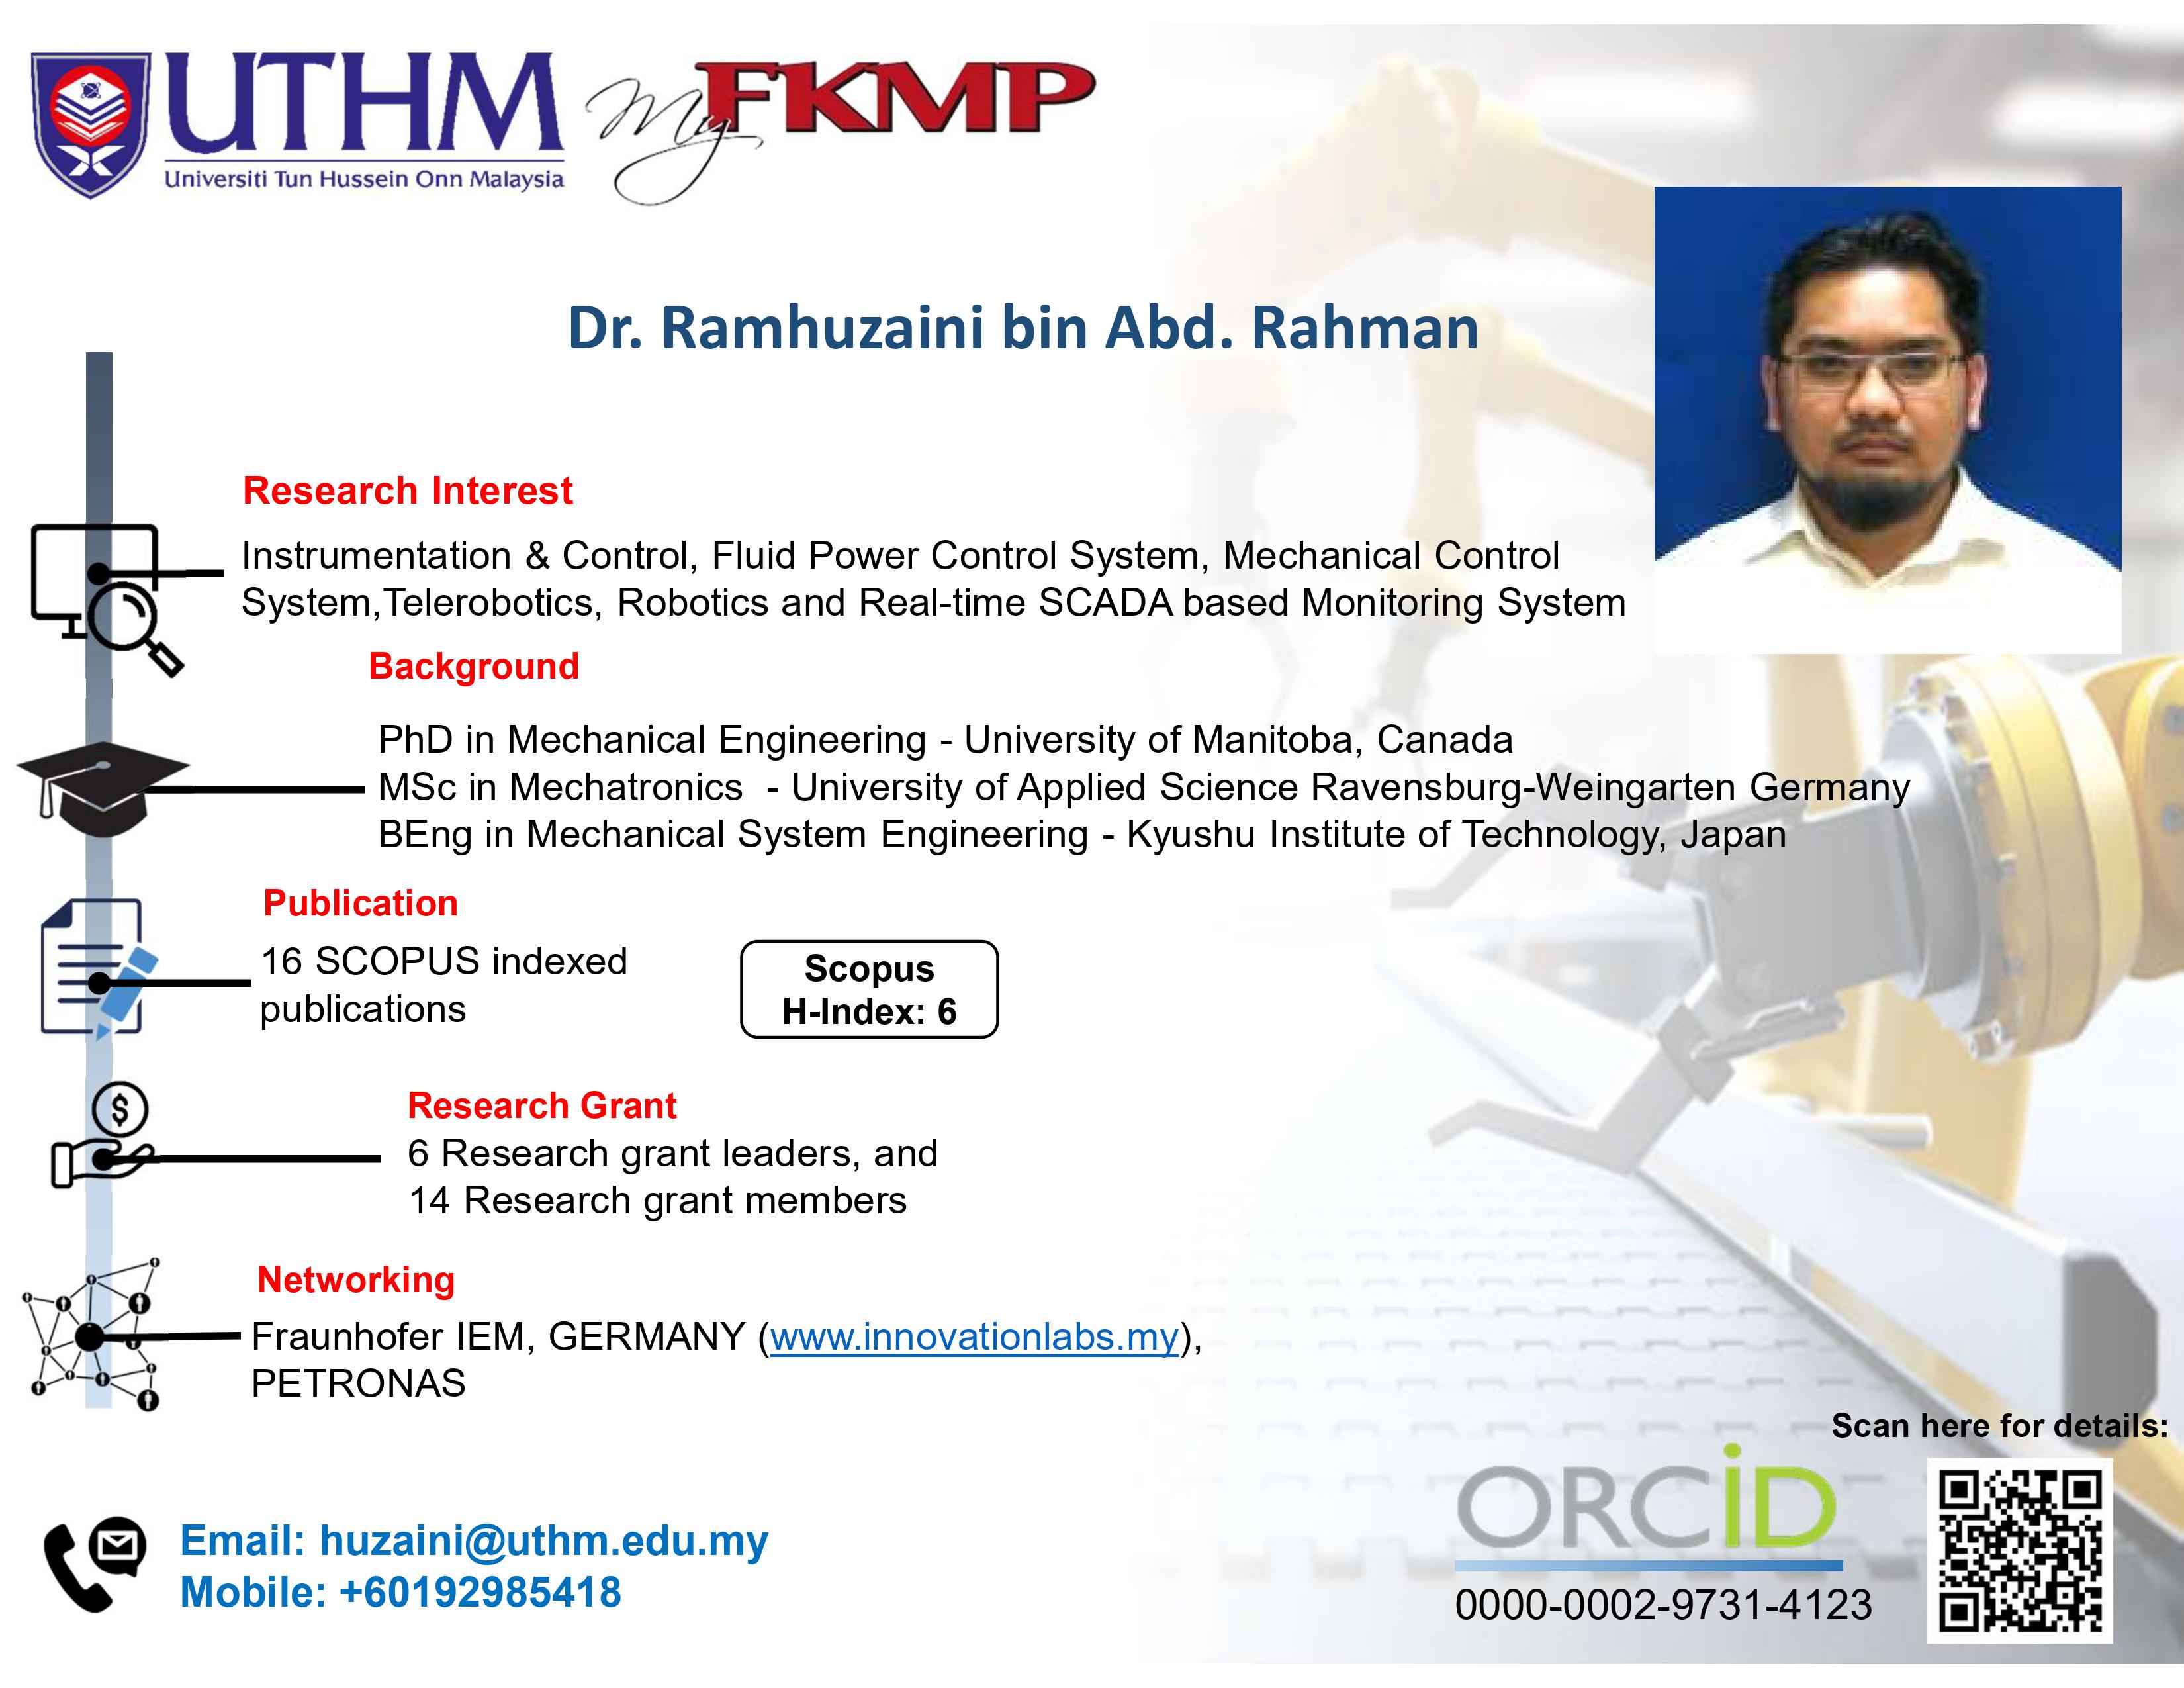 Dr. Ramhuzaini bin Adb. Rahman